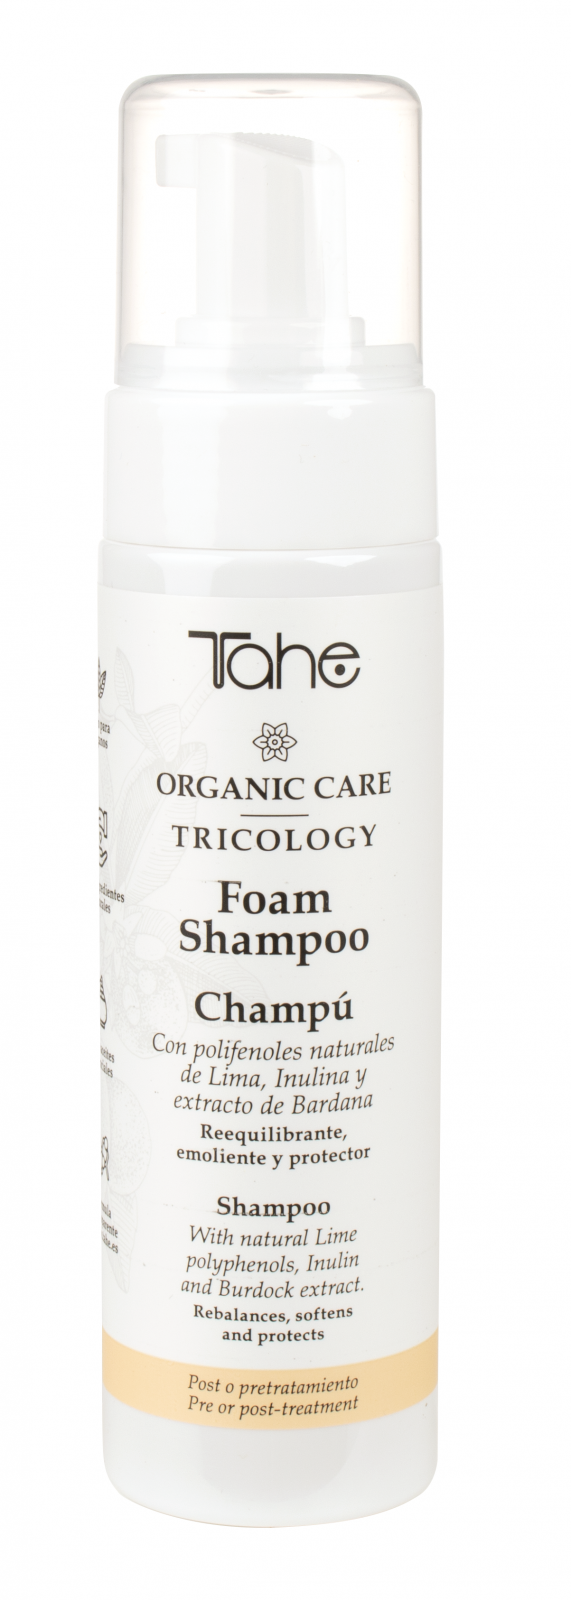 Gentle foam shampoo (200 ml) - before/after transplant washing TAHE